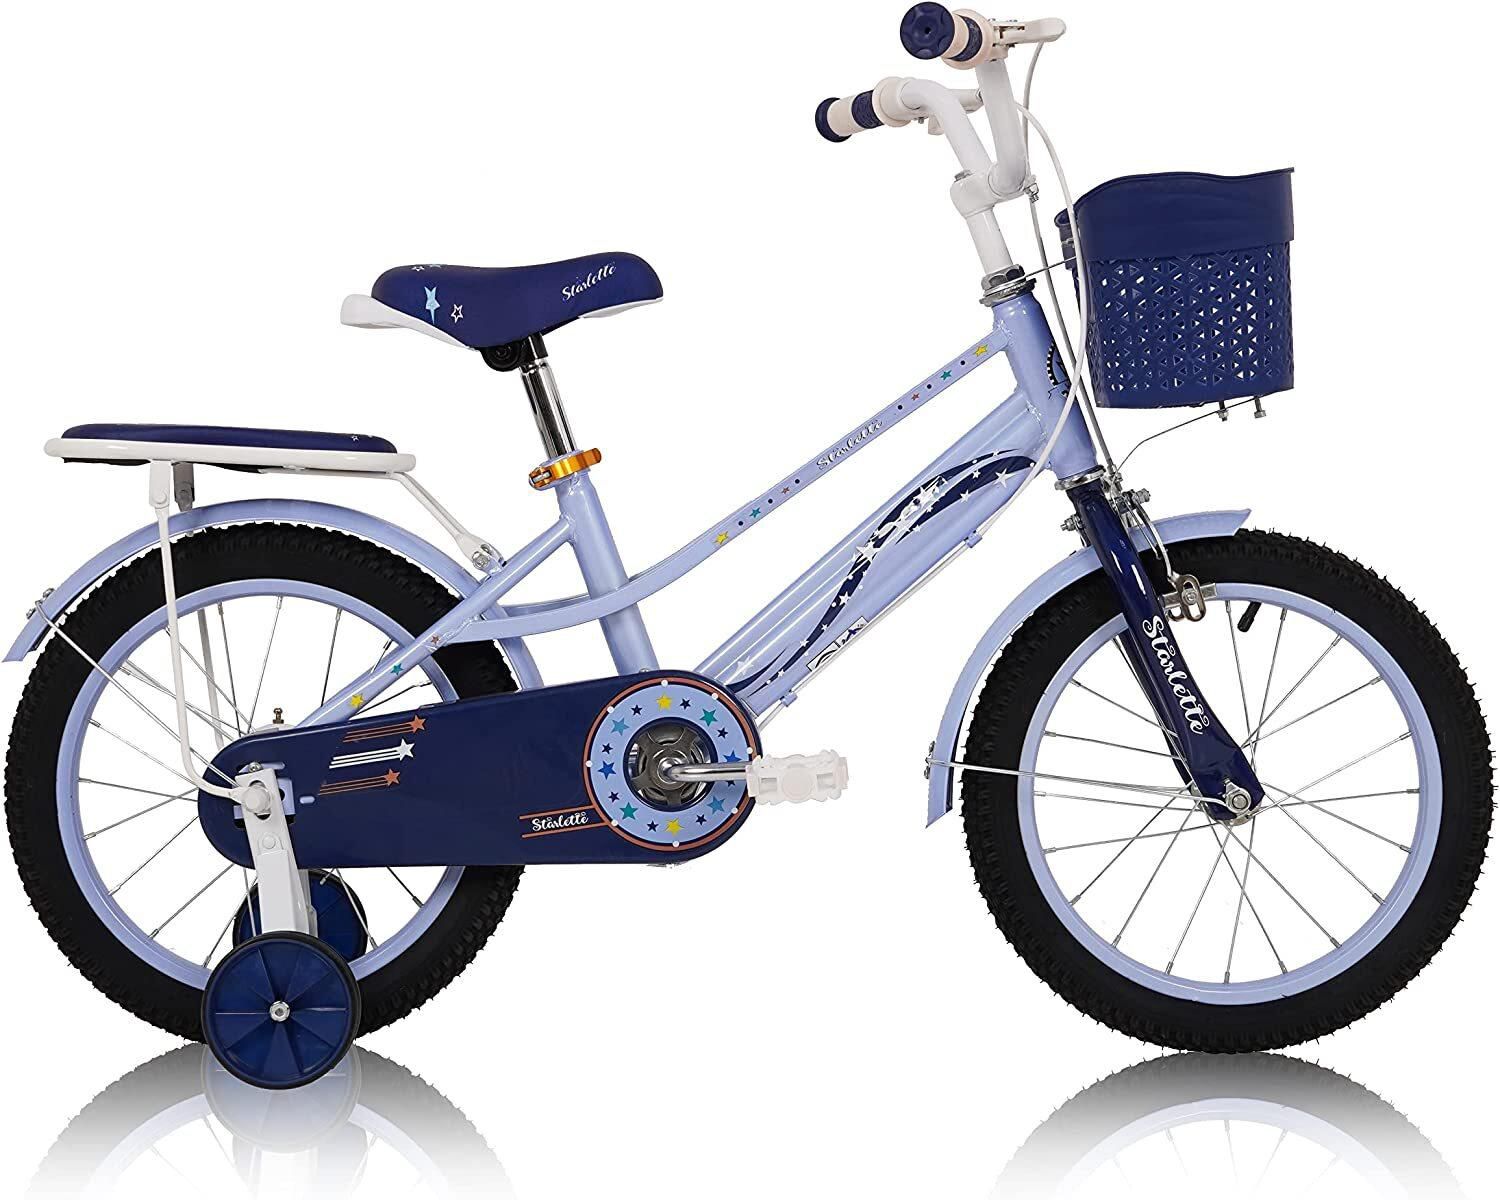 Vego Starlette Kids Road Bike With Basket 16 Inch, Purple